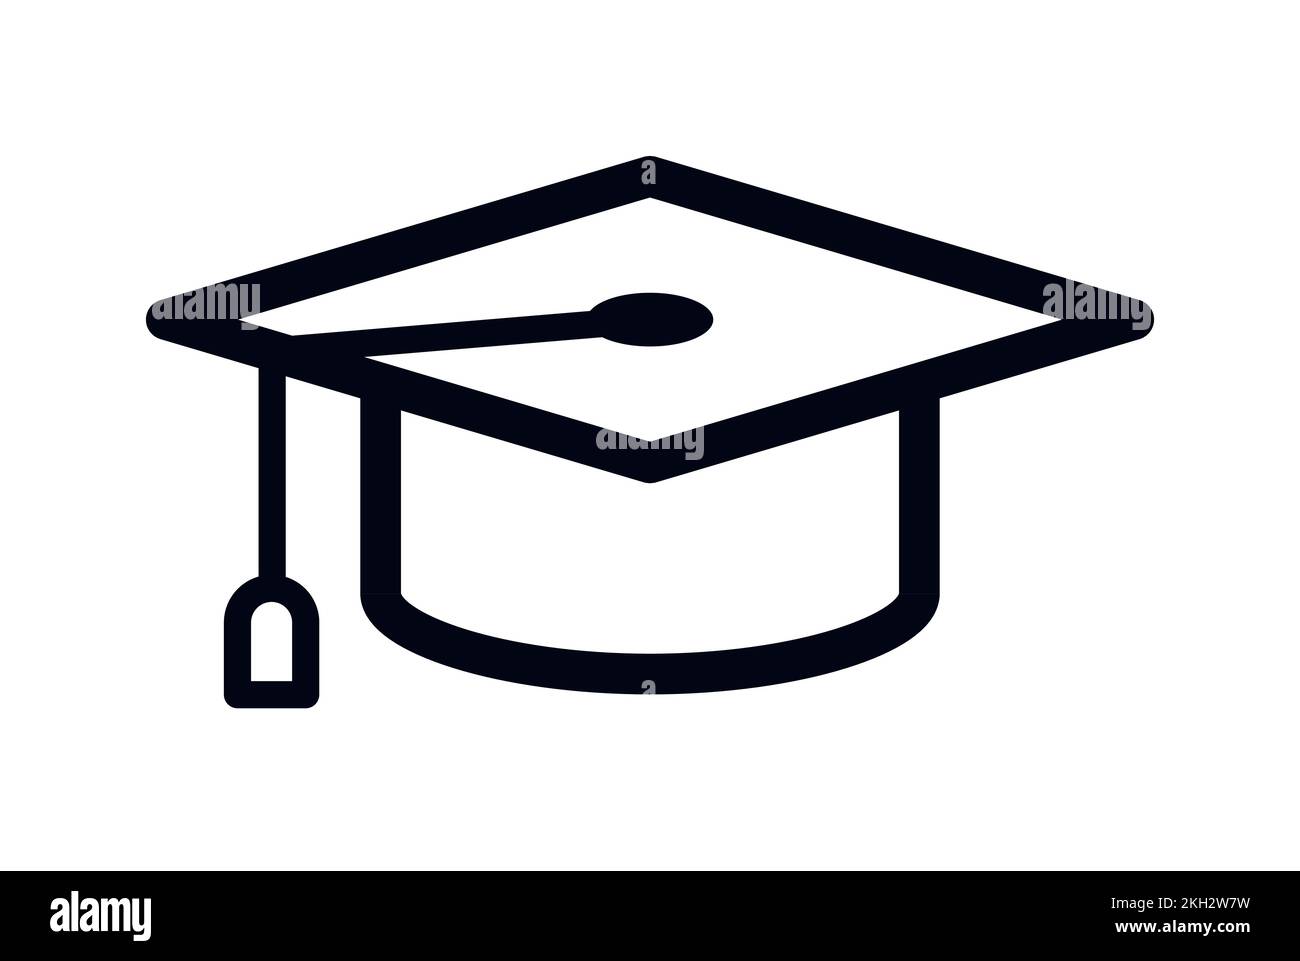 Square academic cap symbol graduate cap for education graduation and knowledge vector icon Stock Vector